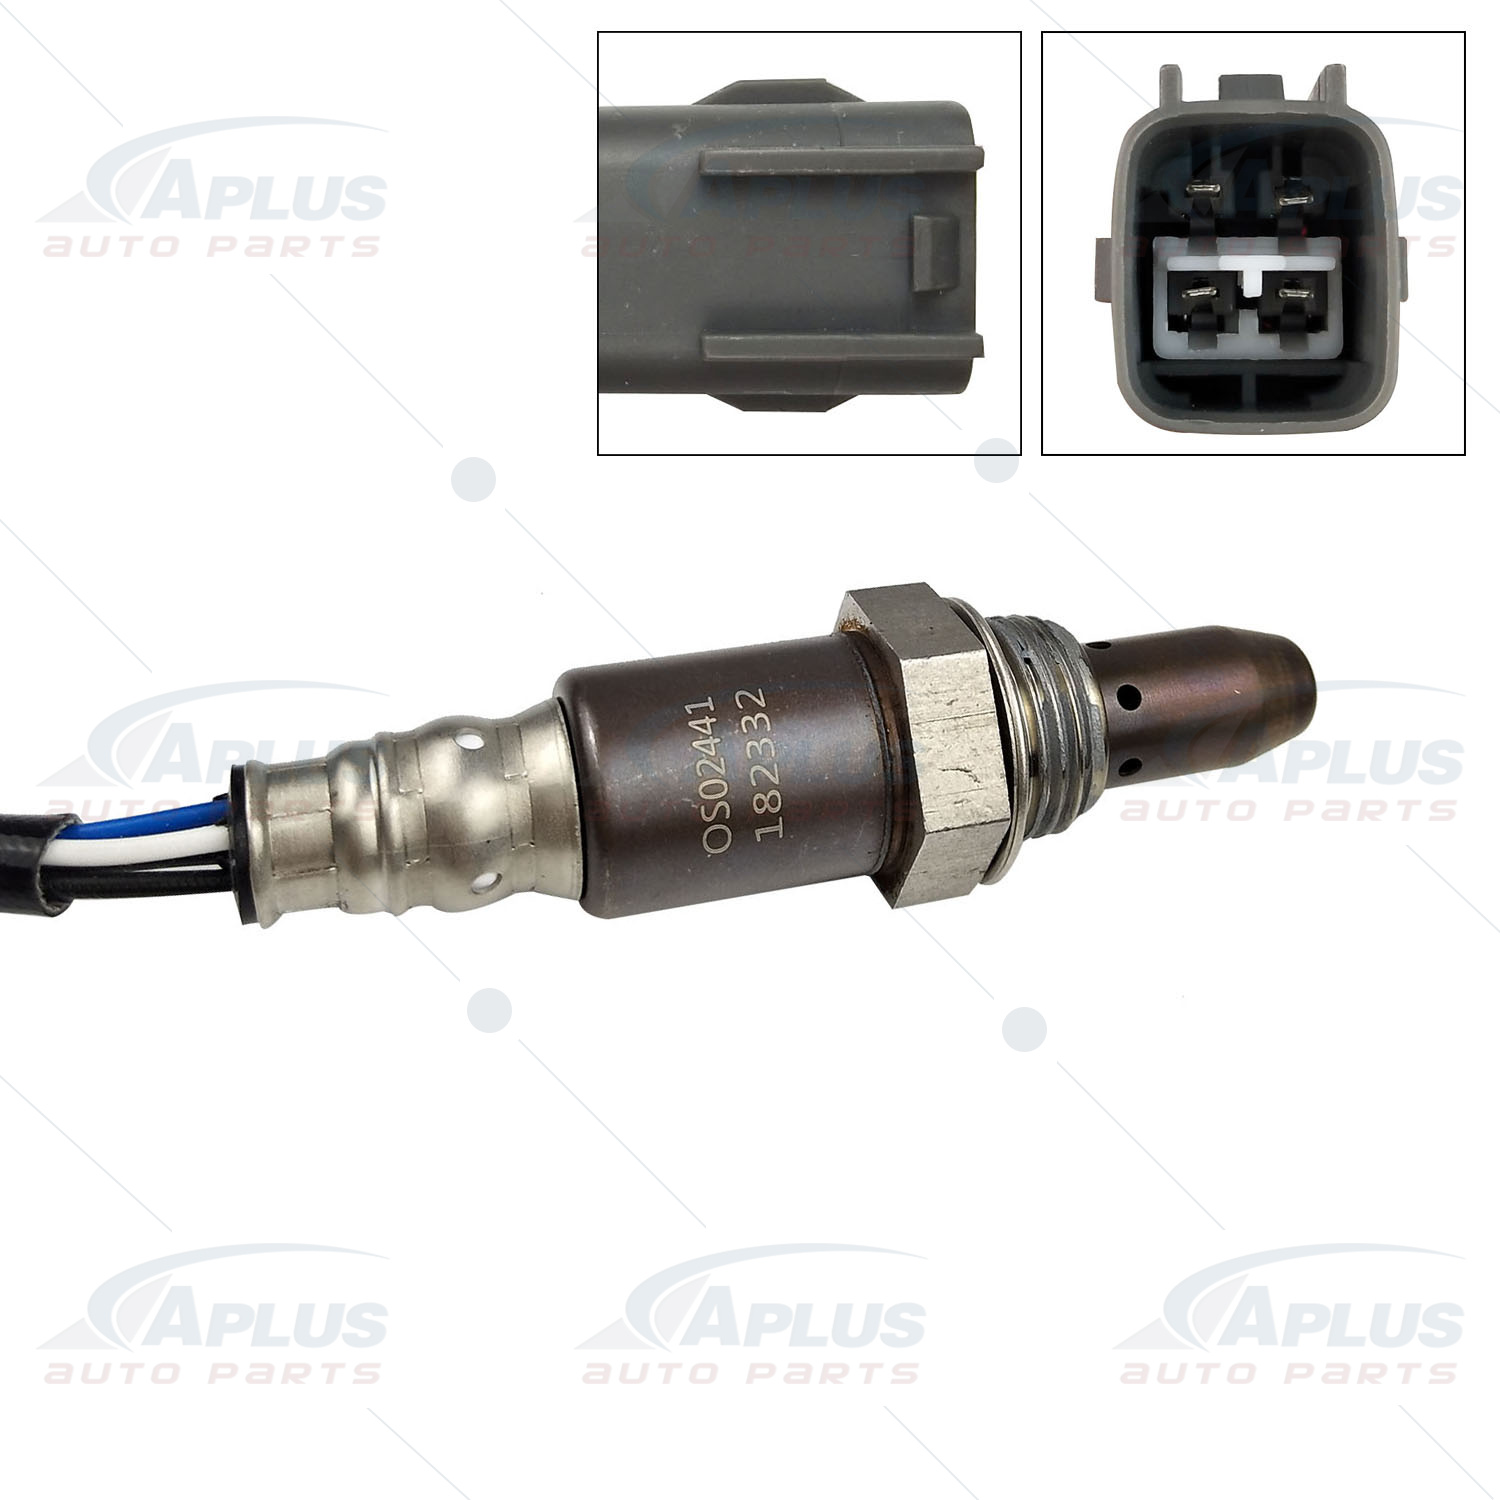 2Pcs Oxygen Sensor For 2013-2007 Toyota Tundra 4.6L 4.7L 5.7L | eBay